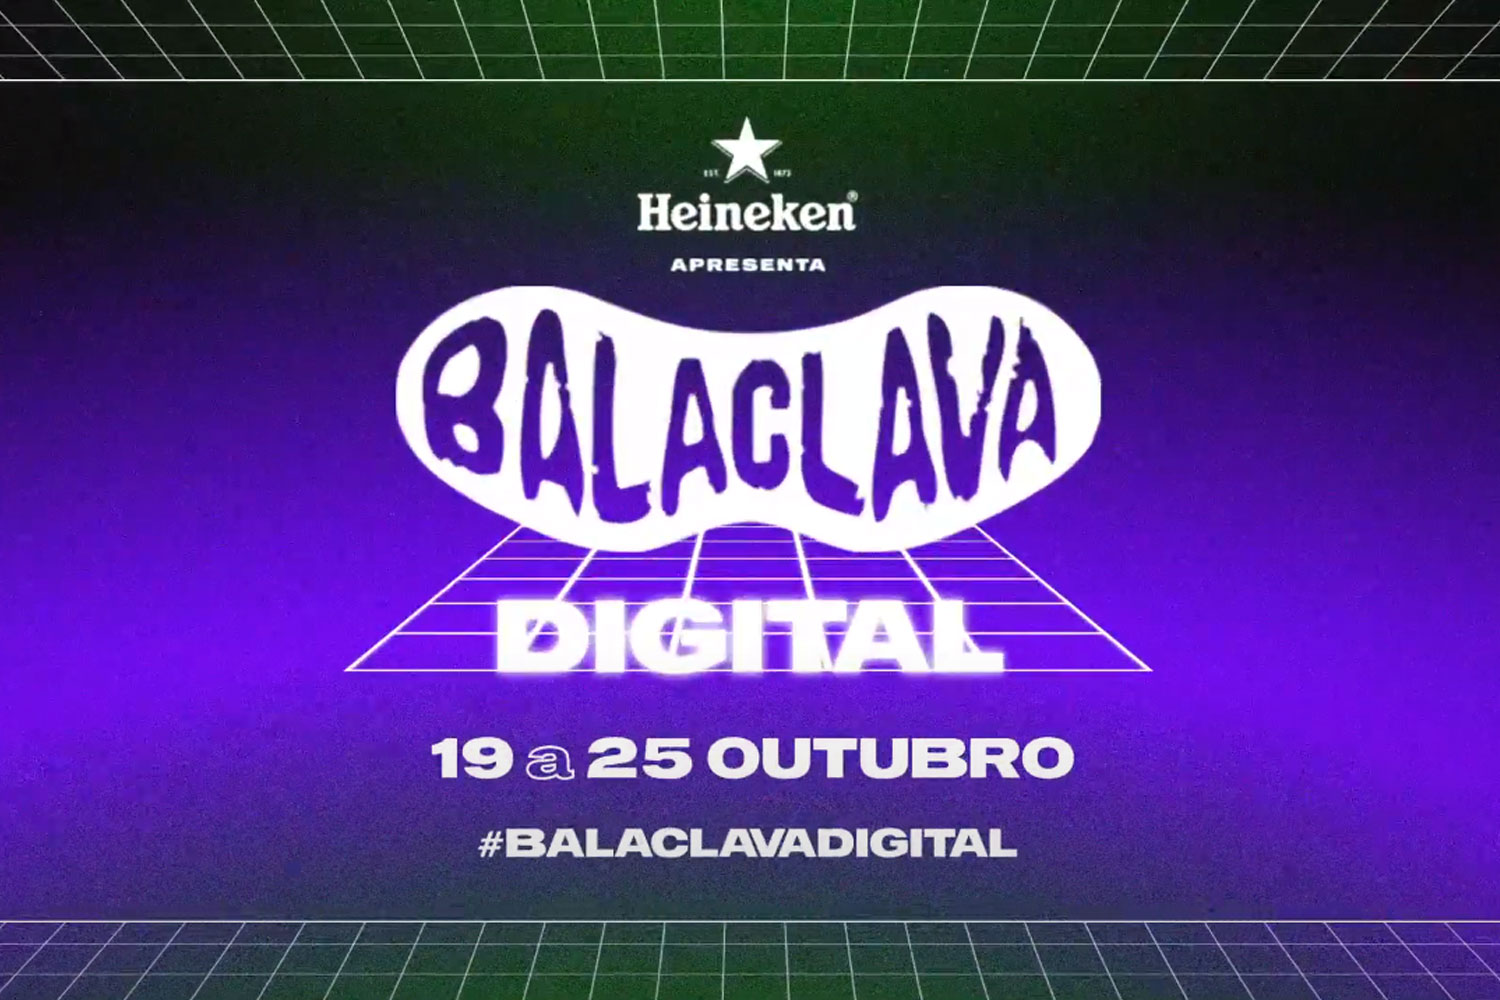 Balaclava Digital